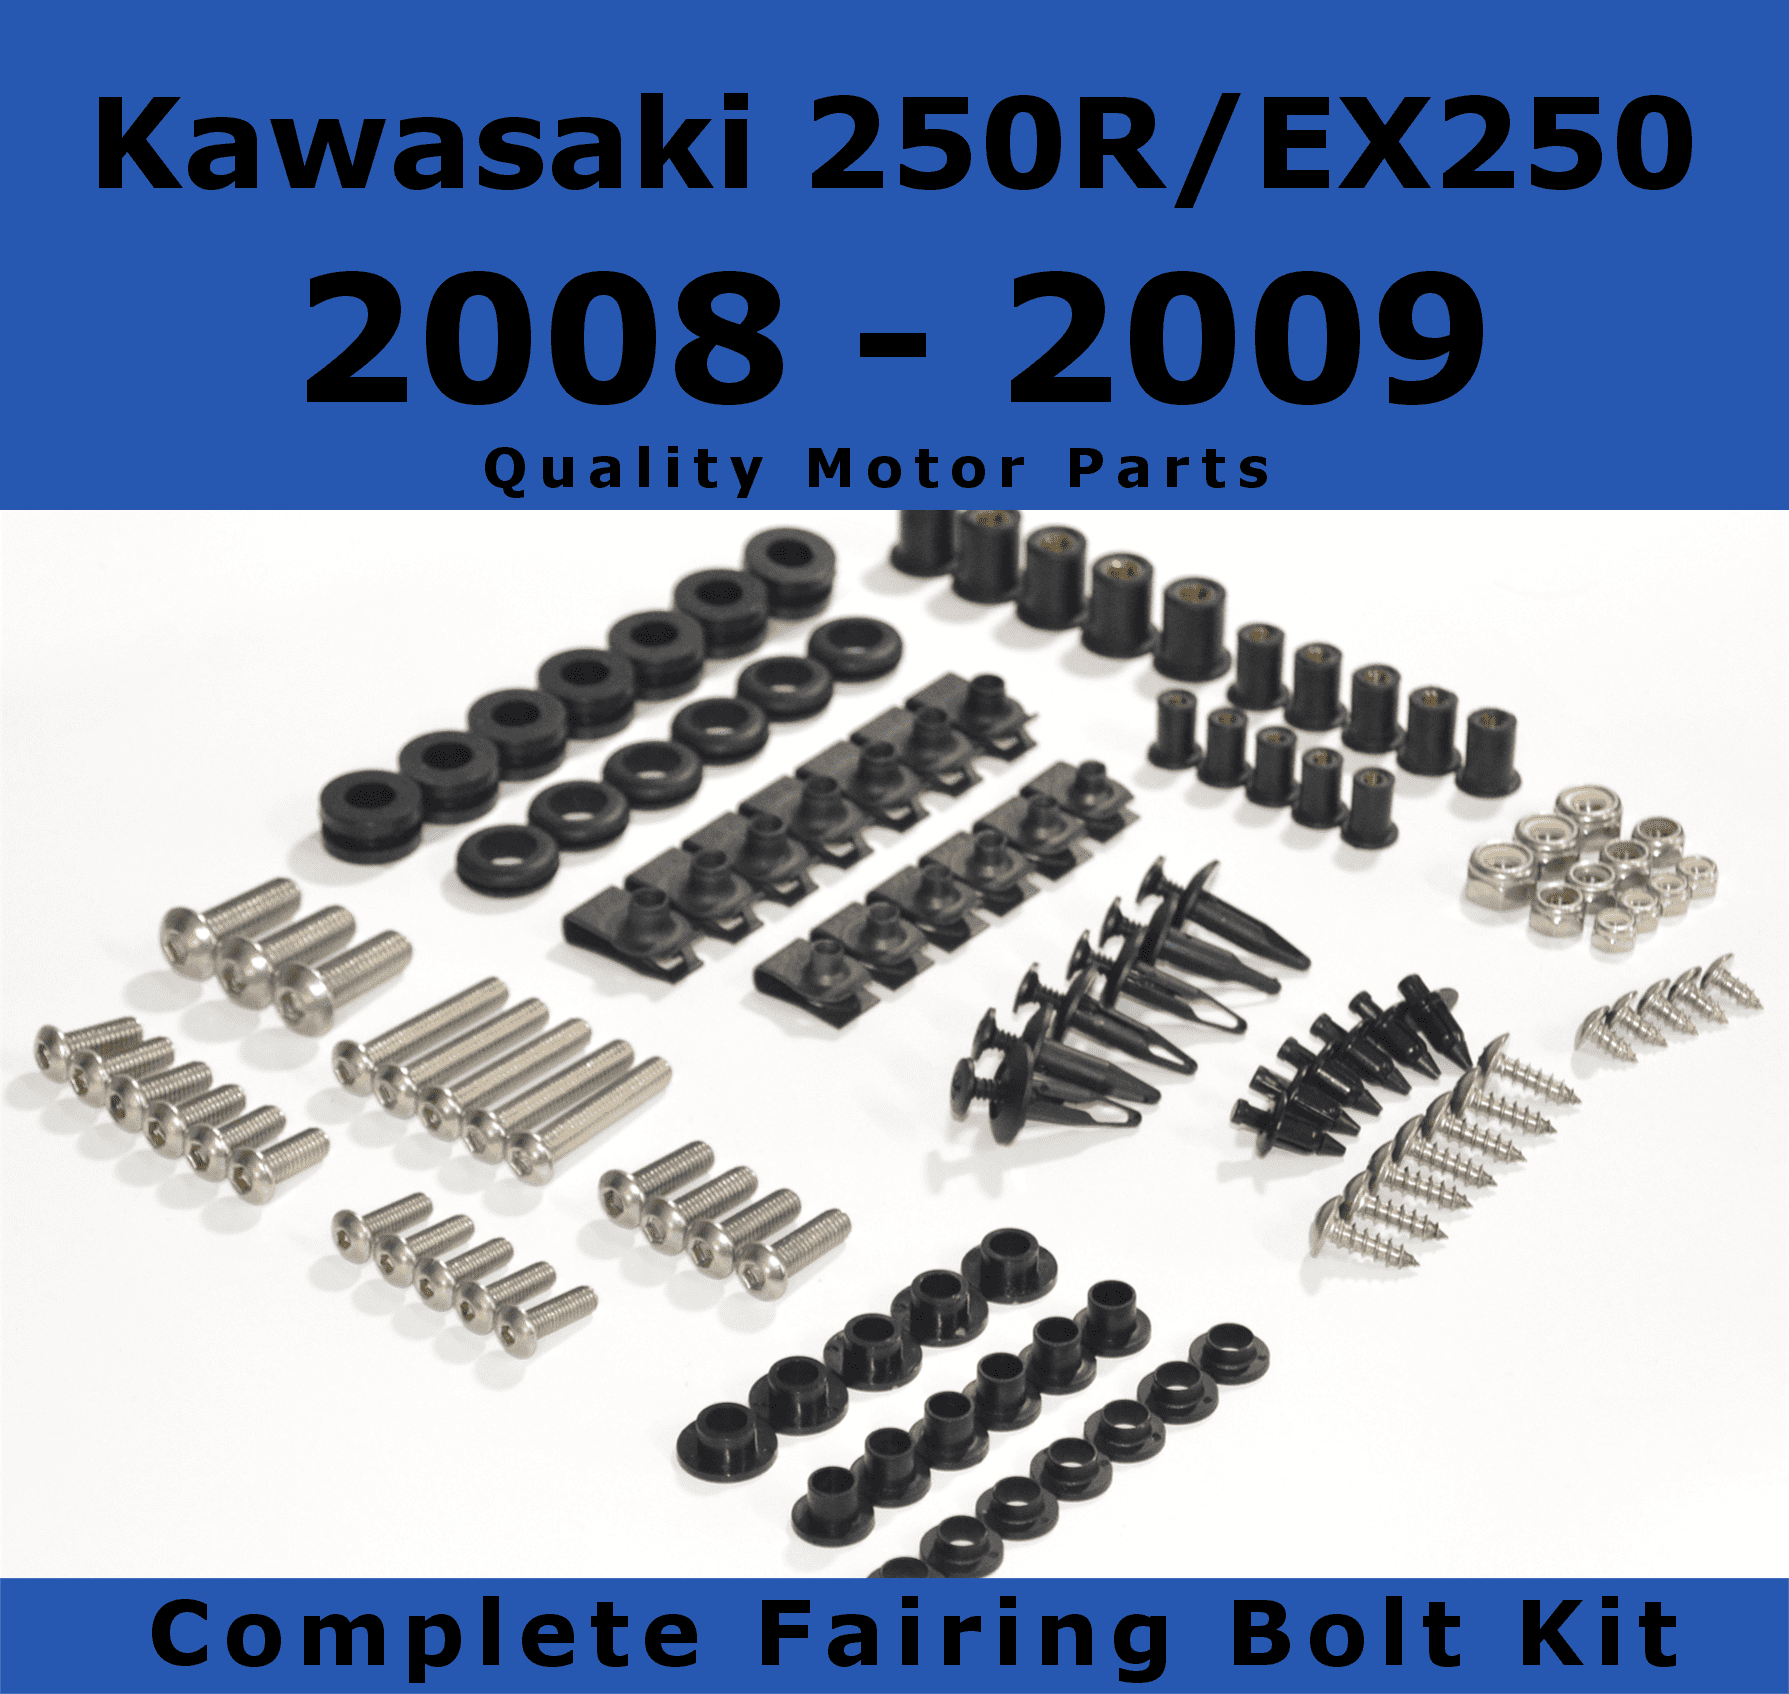 Mounting Kits Washers/Nuts/Fastenings/Clips/Grommets Matte Black Xitomer Full Sets Fairing Bolts Kits for Kawasaki Ninja250R EX250R 2008 2009 2010 2011 2012 